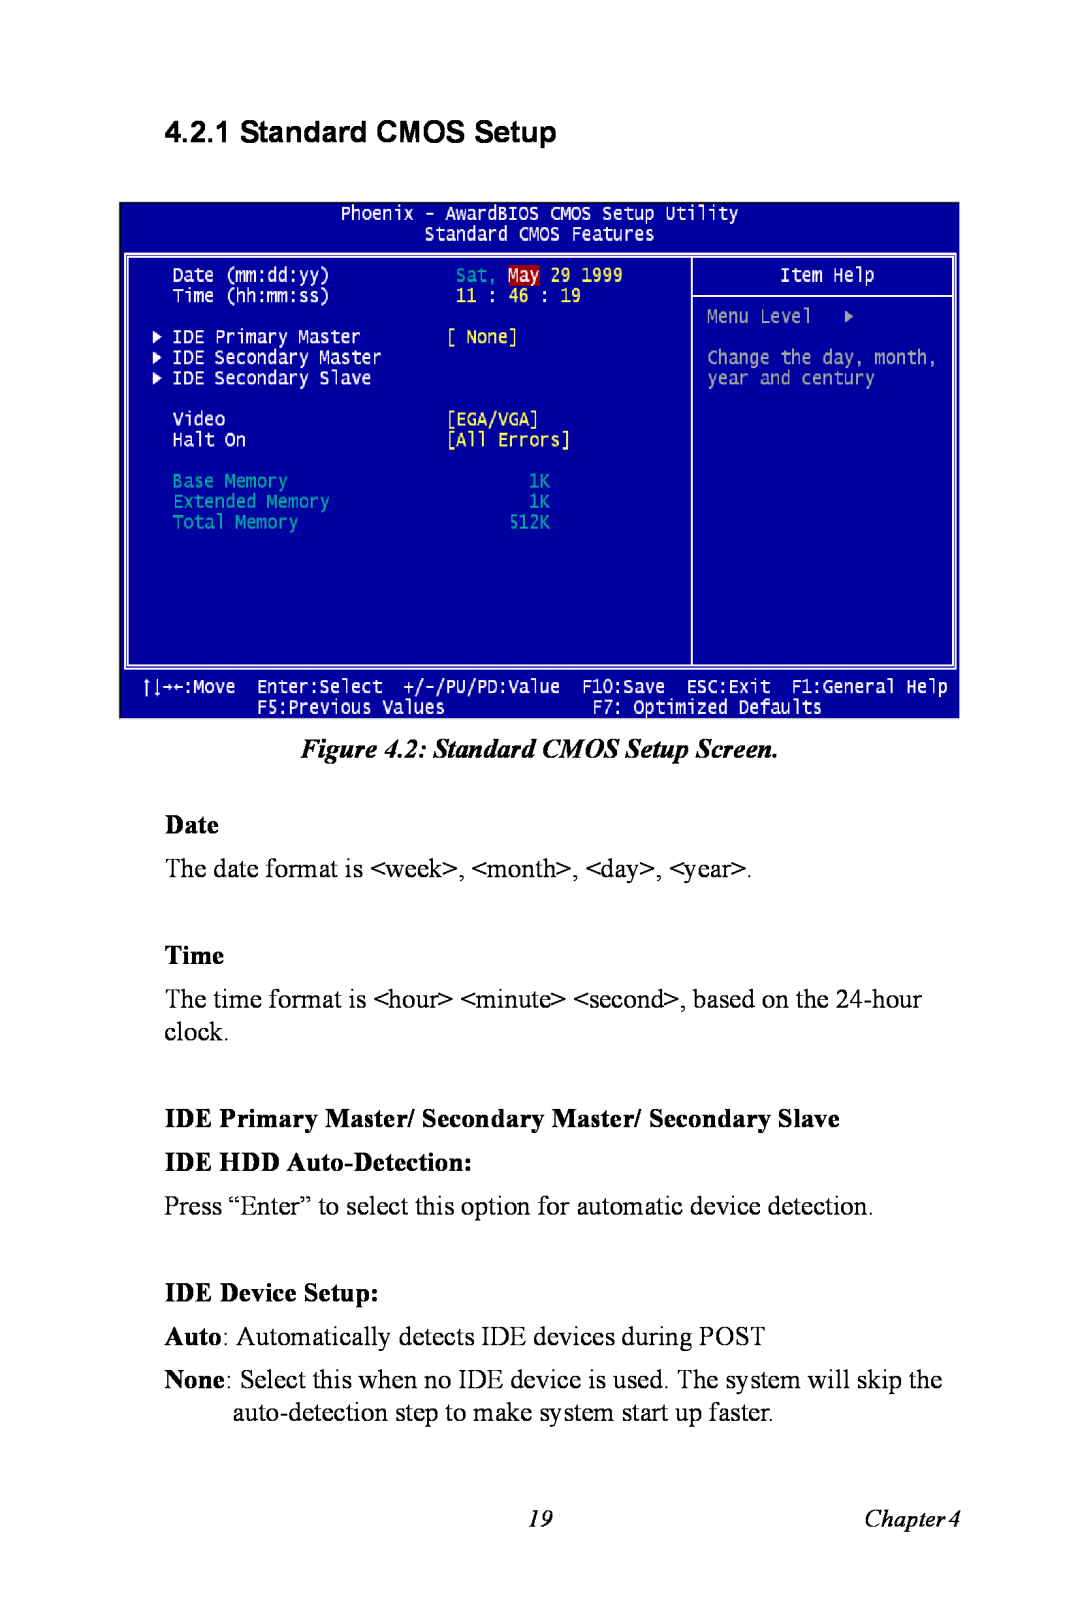 Intel 3U Compact PCI, MIC-3321 user manual 2: Standard CMOS Setup Screen, Date, Time, IDE Device Setup 